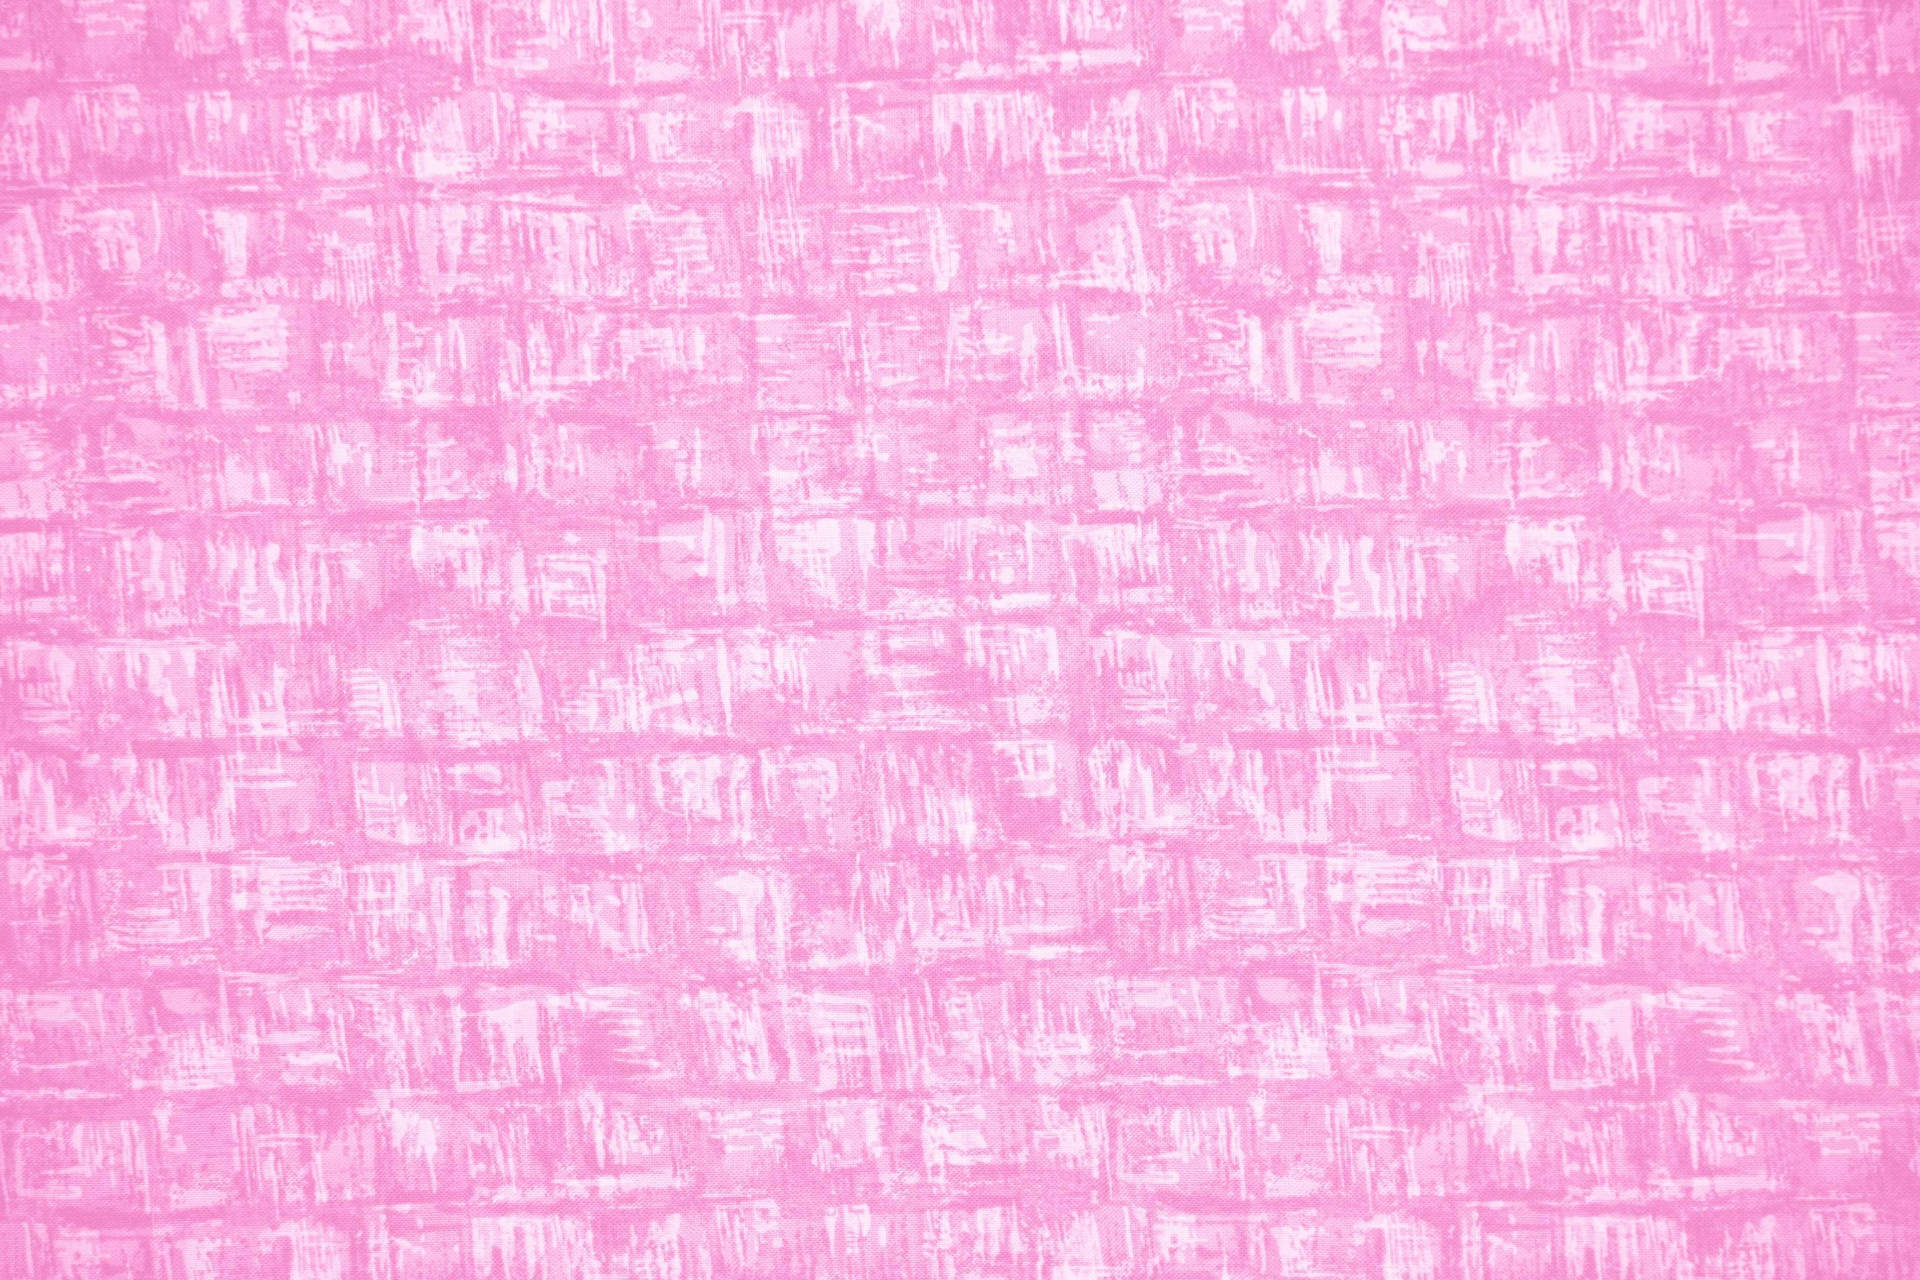 Light Pink Digital Art Background